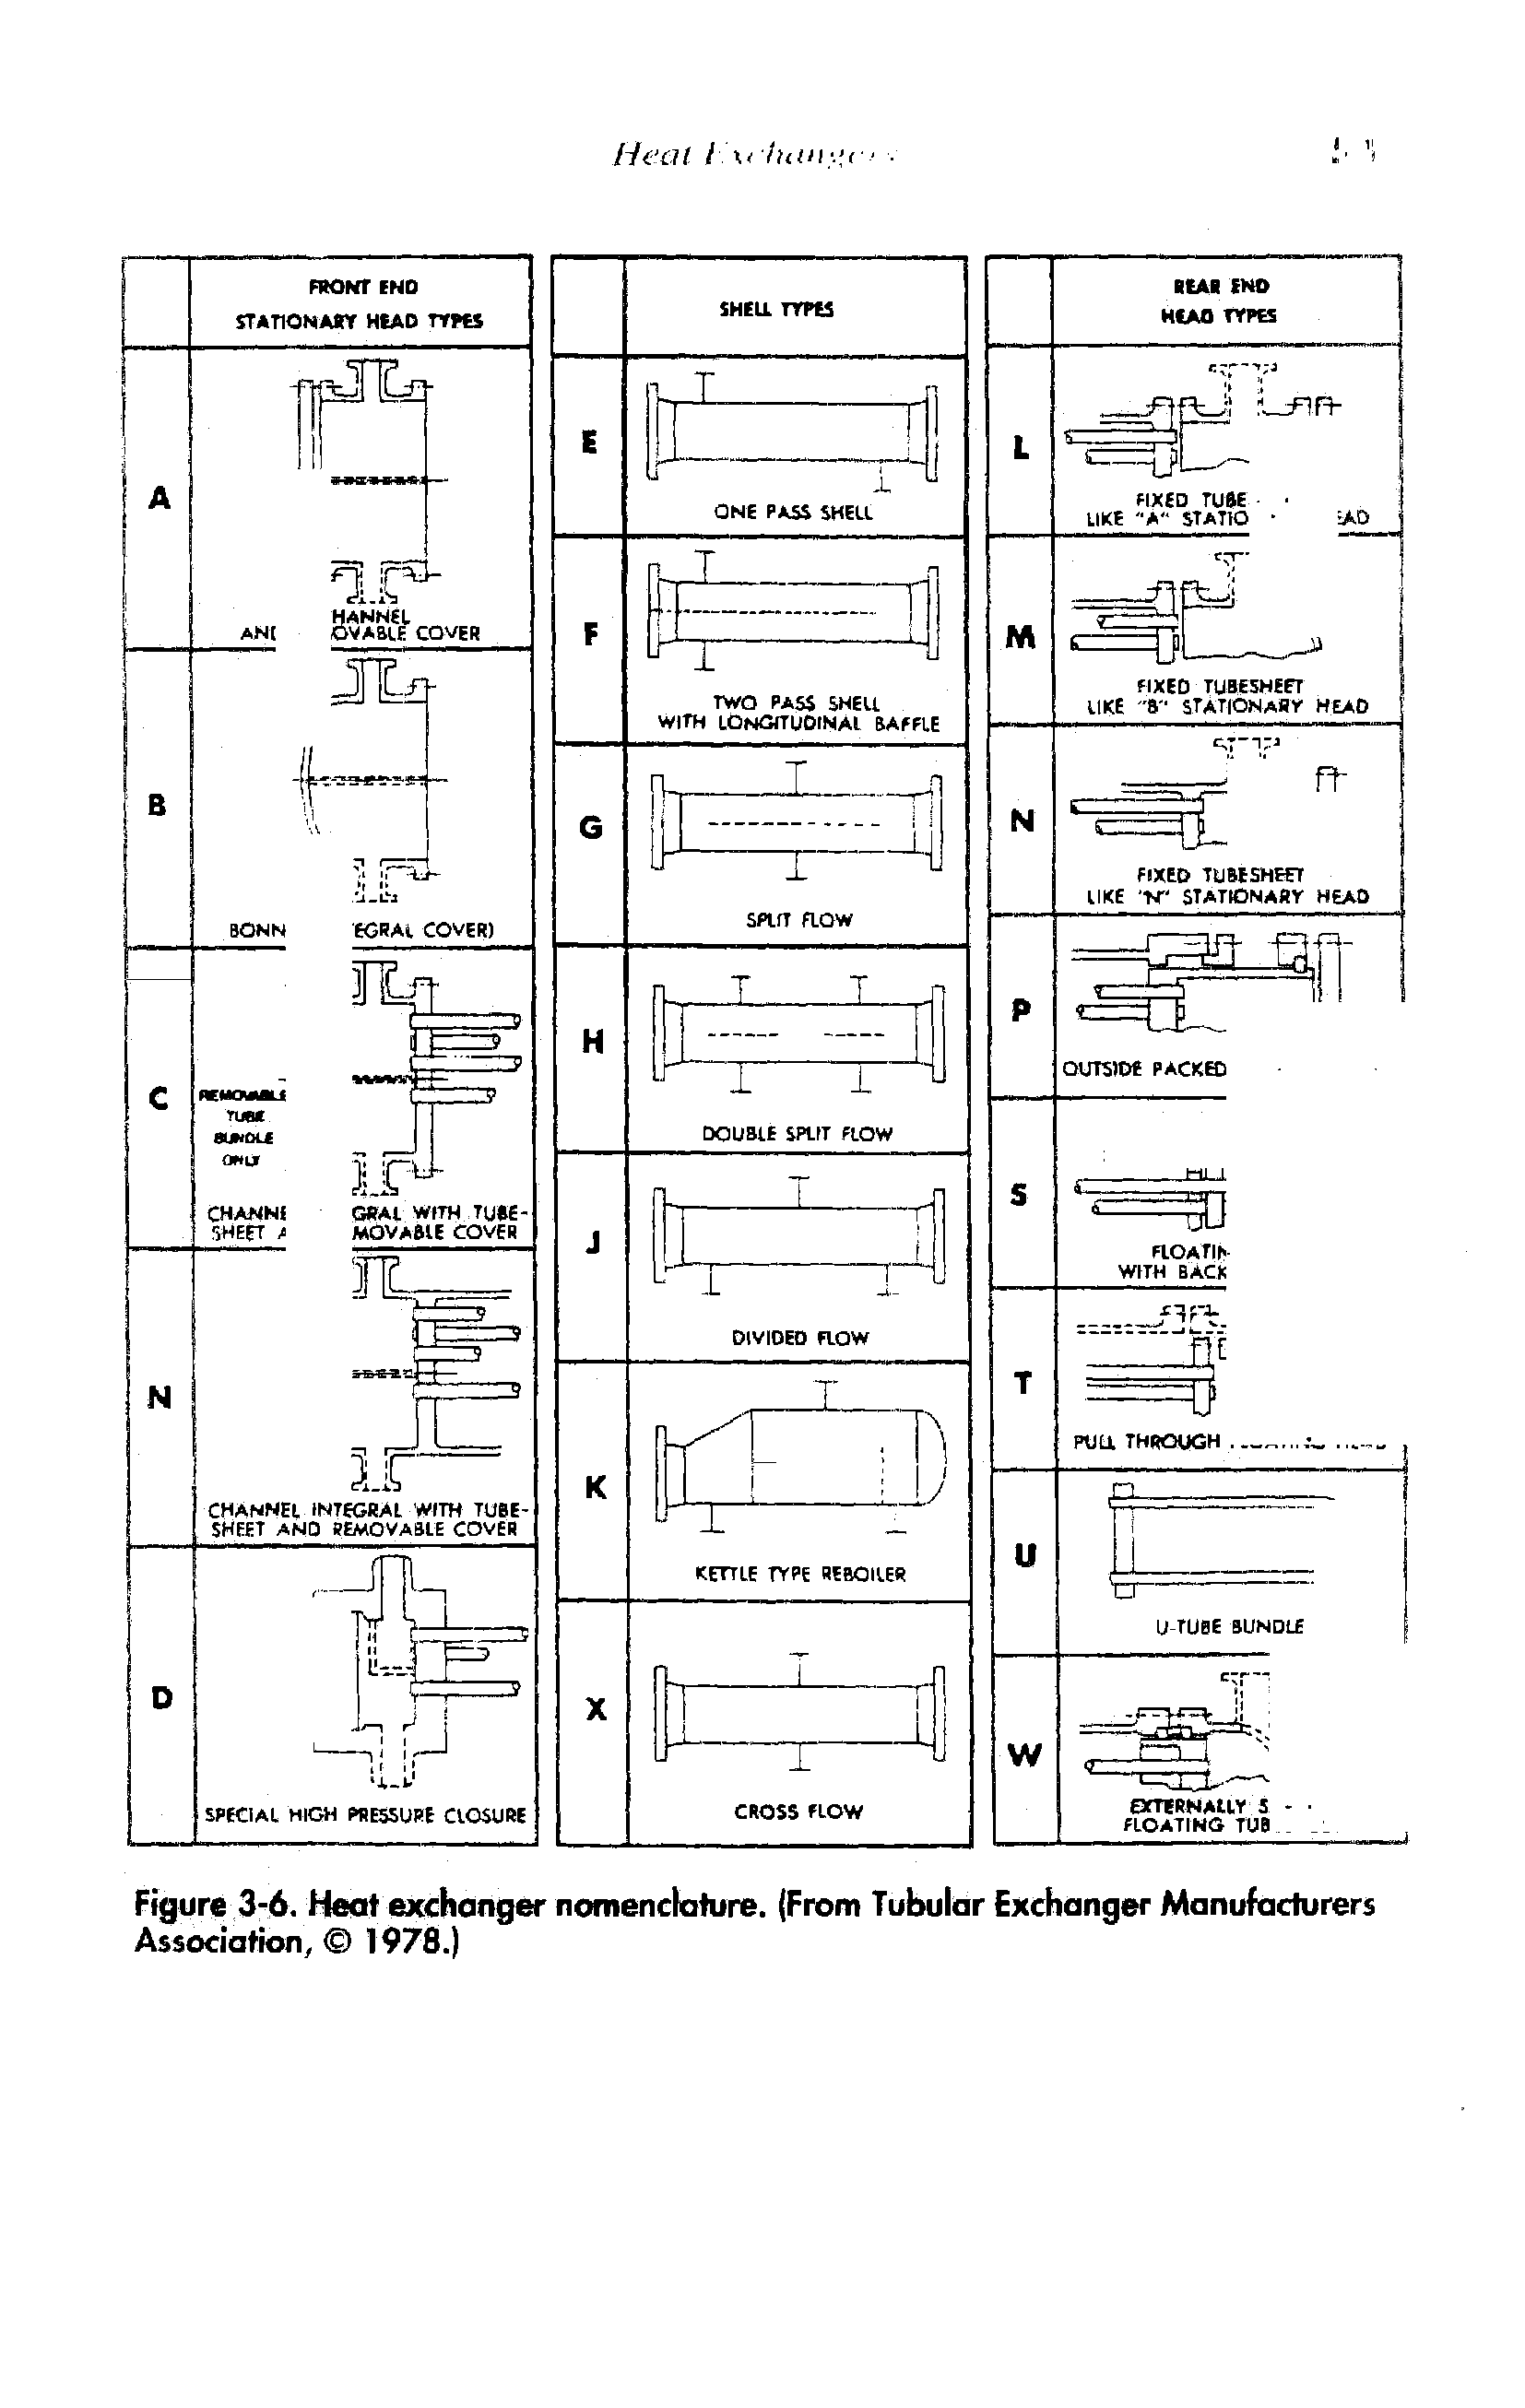 Figure 3-6. Heat exchanger nomenclature. (From Tubular Exchanger Manufacturers Association, 1978.)...